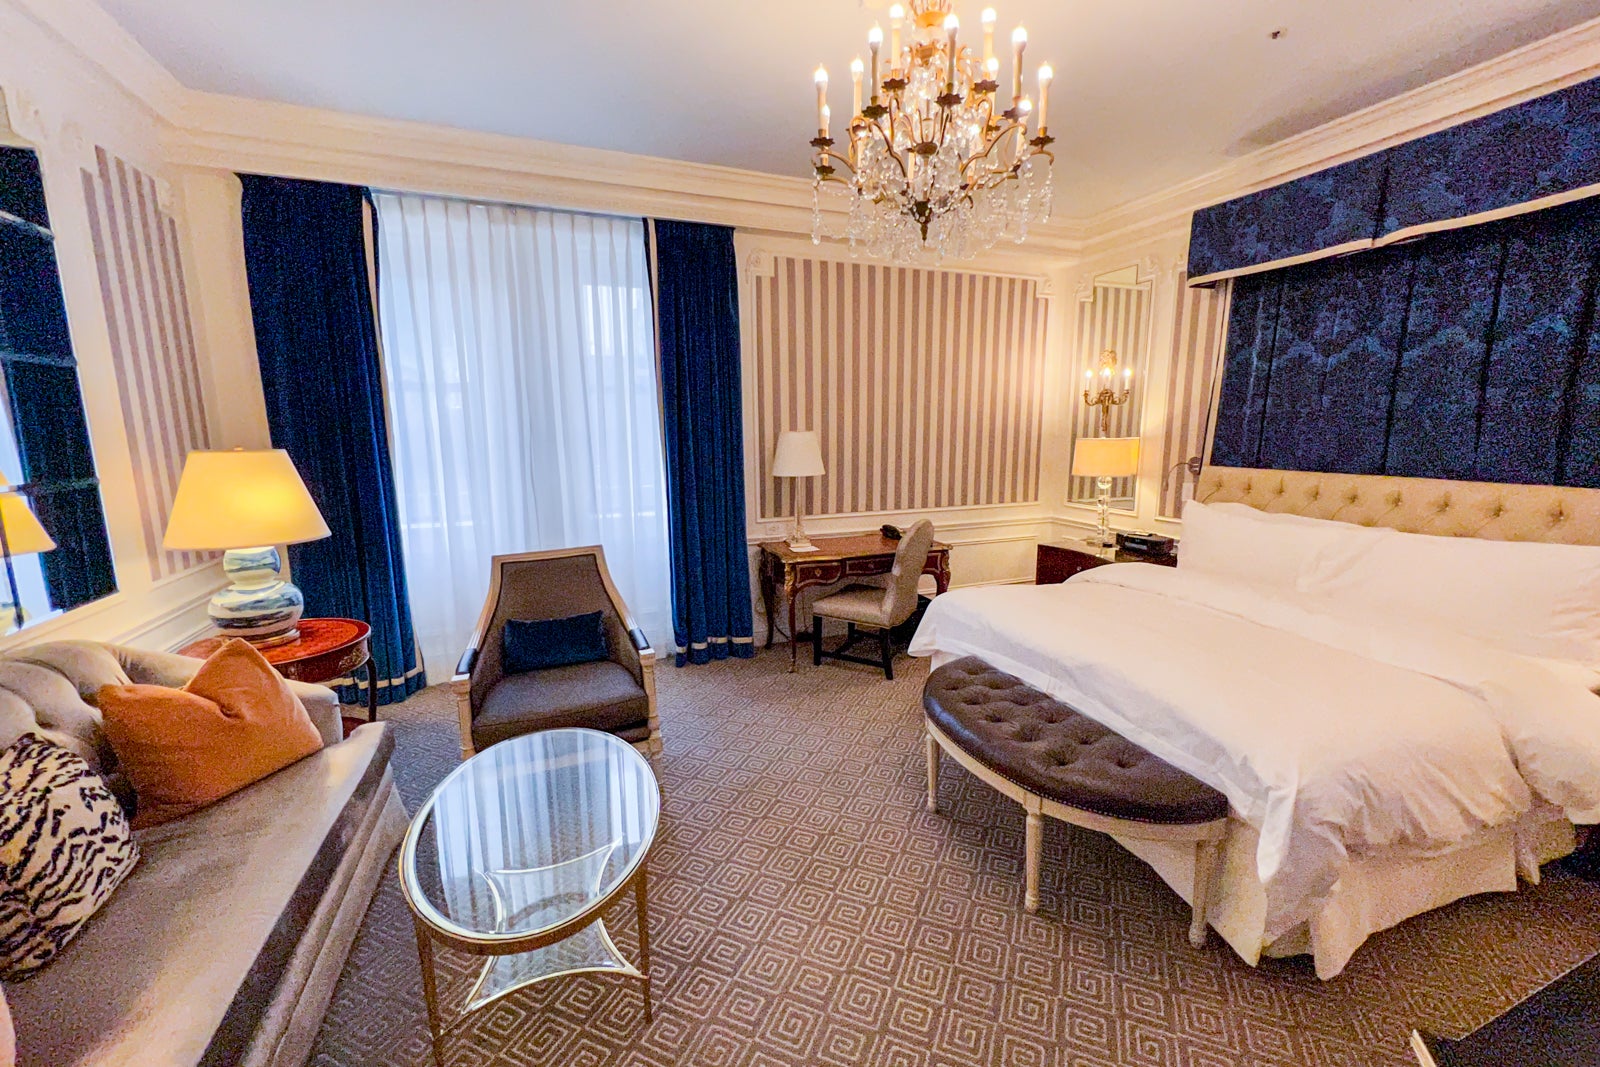 a luxury hotel bedroom